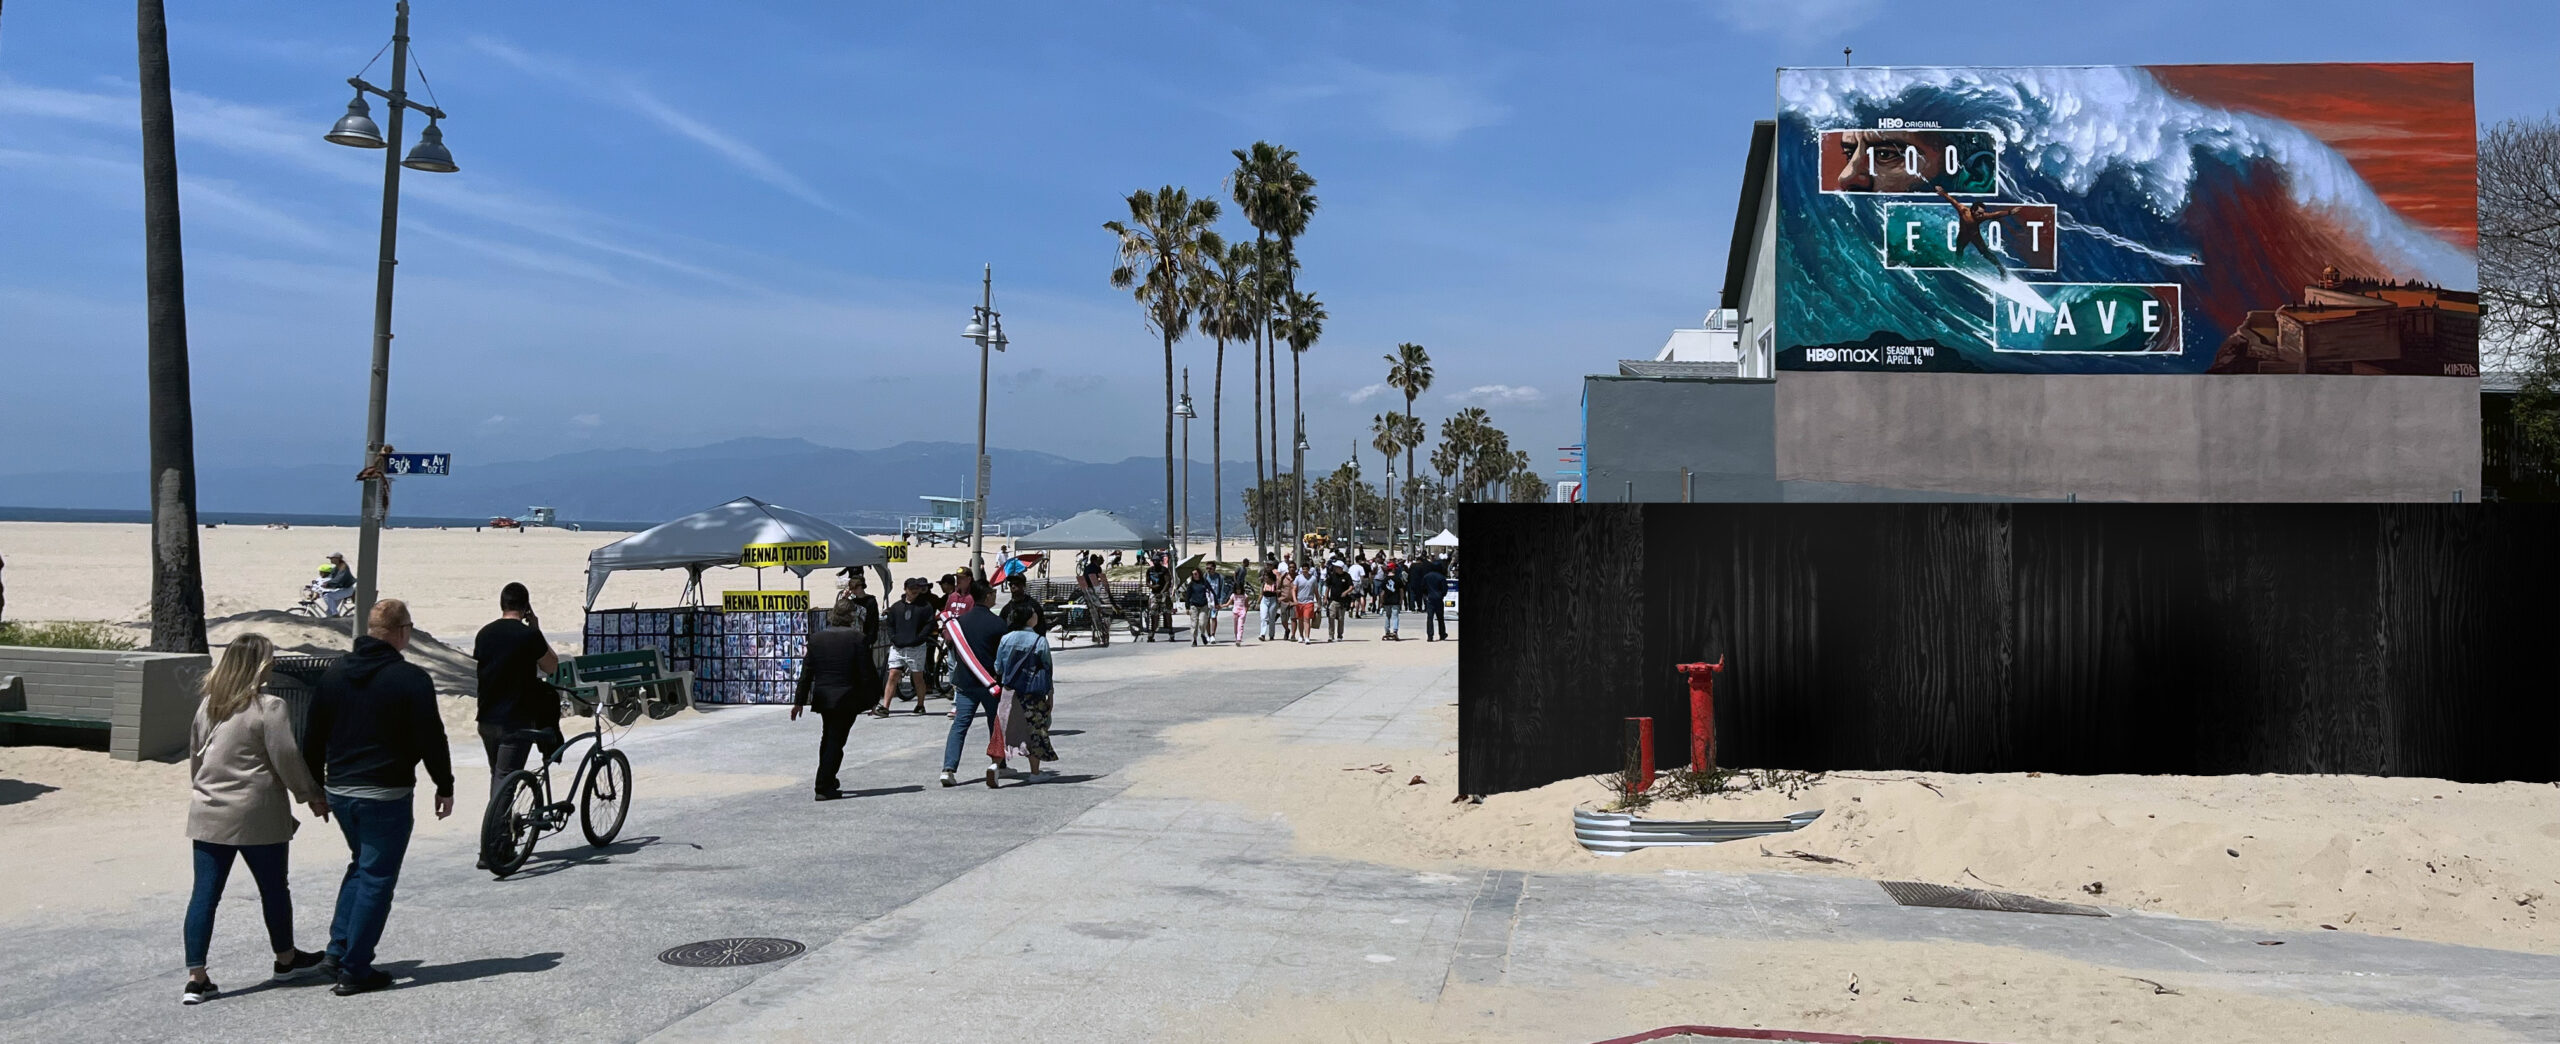 HBOMax 100 Foot Wave Wallscape Mural Venice Beach OOH Advertising Boardwalk View